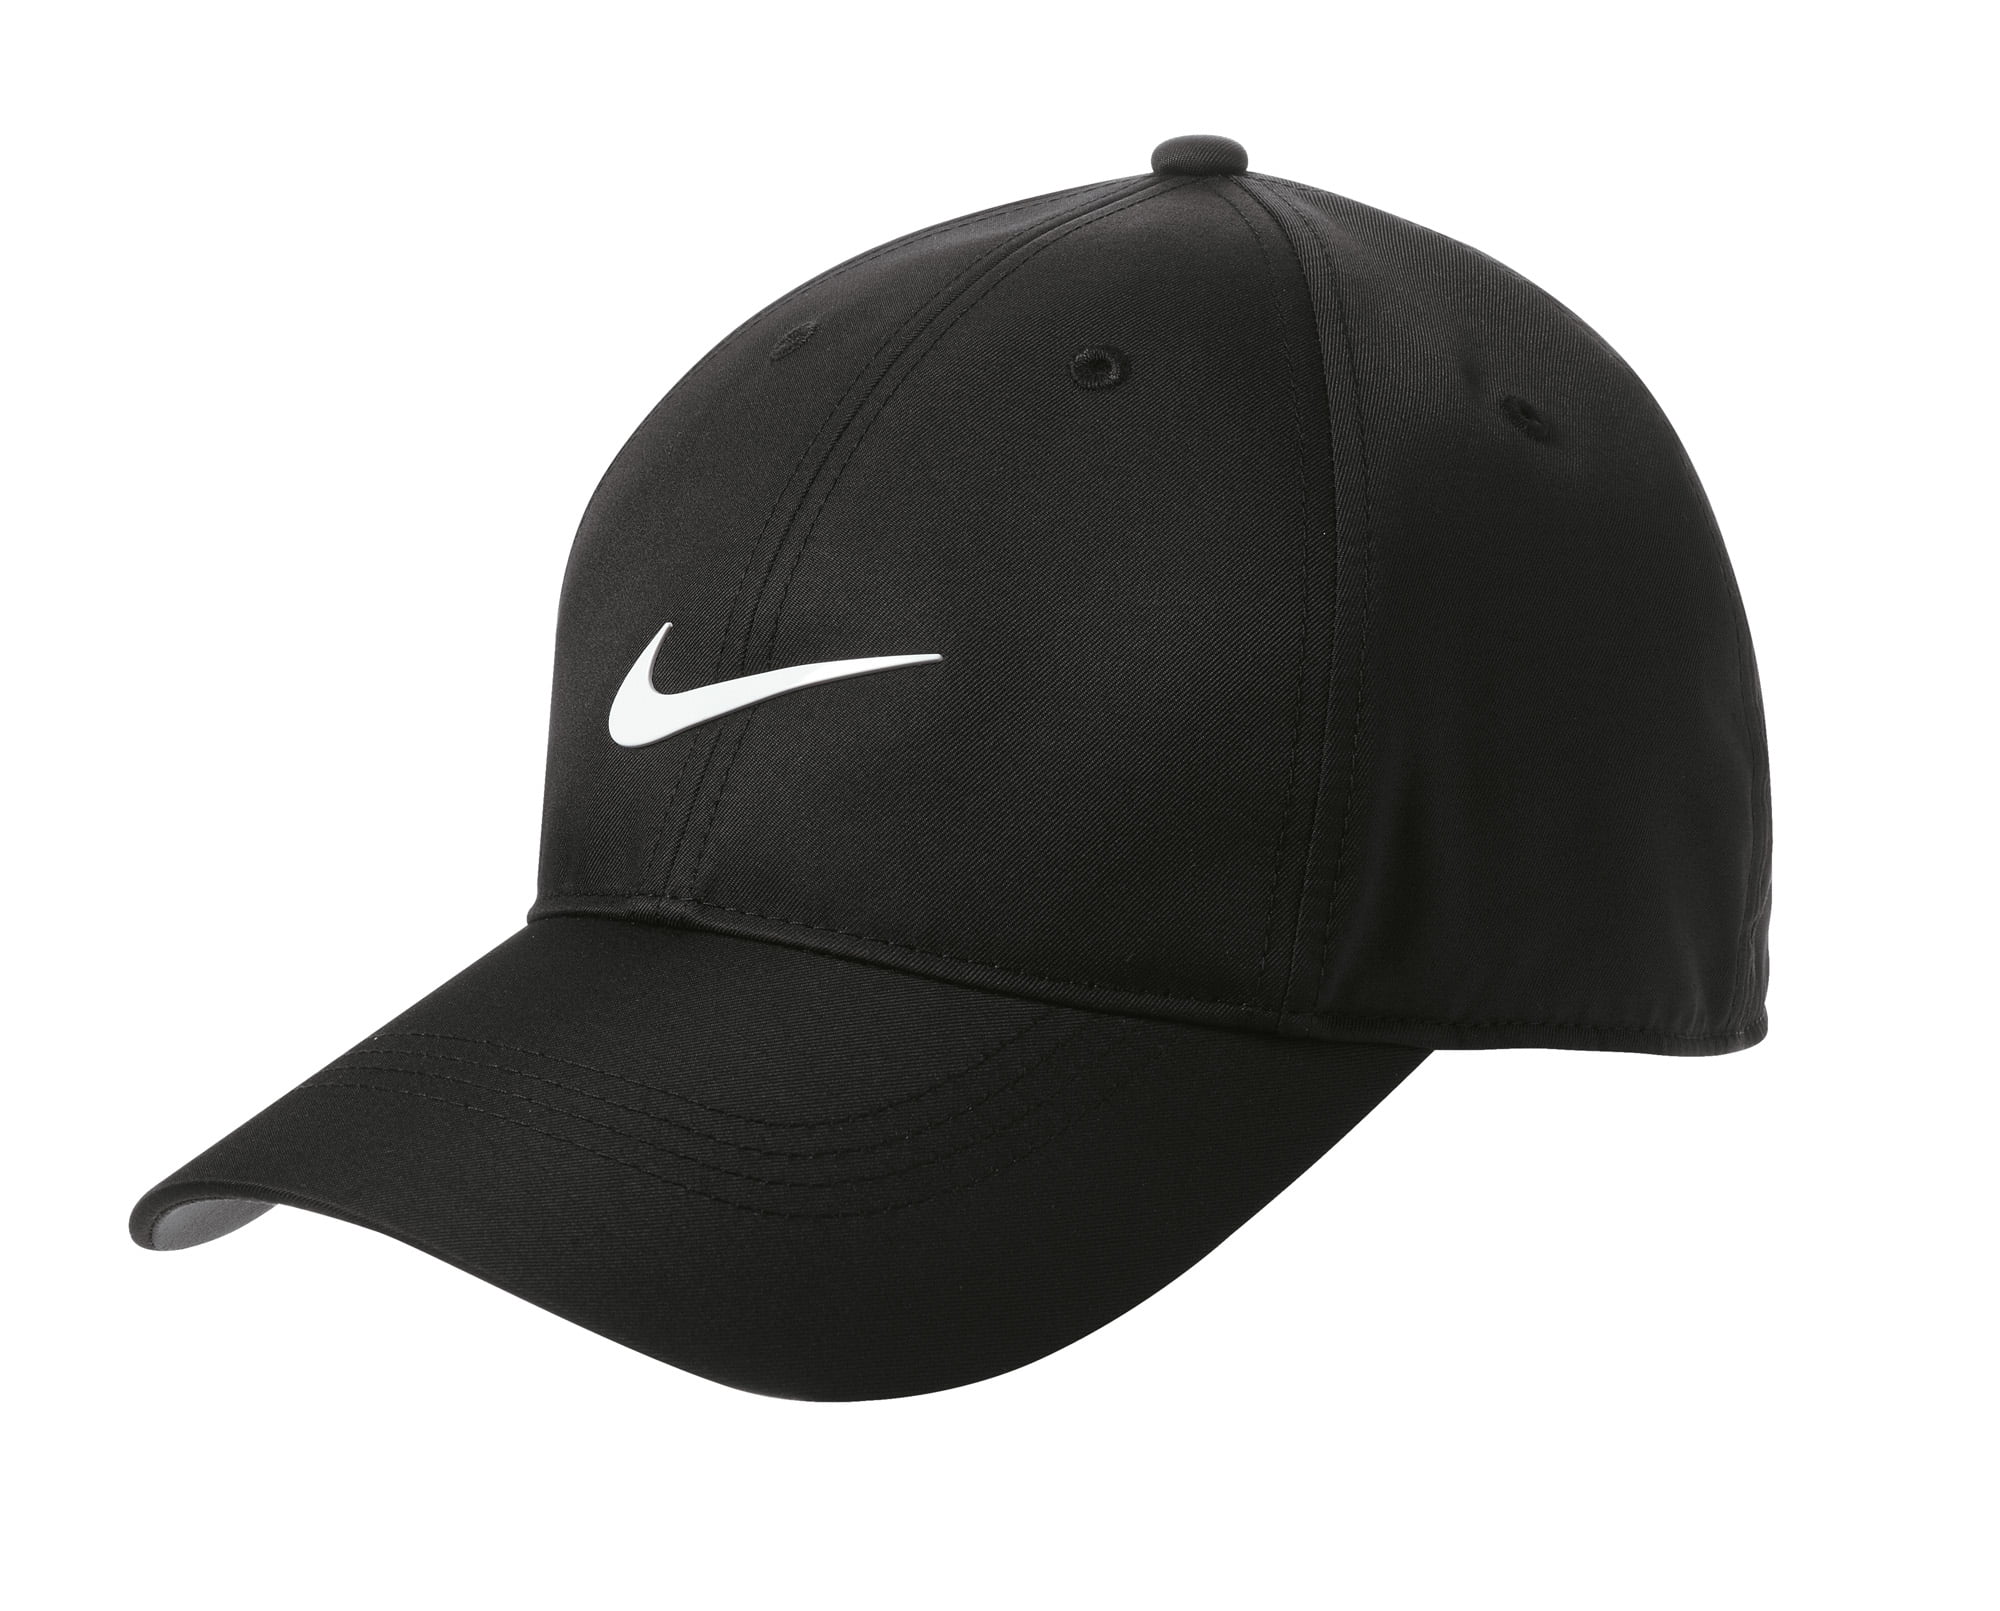 sensatie Deens Visser NEW Nike Golf Tech Swoosh Dri-Fit Unstructured Black/White Hat/Cap -  Walmart.com